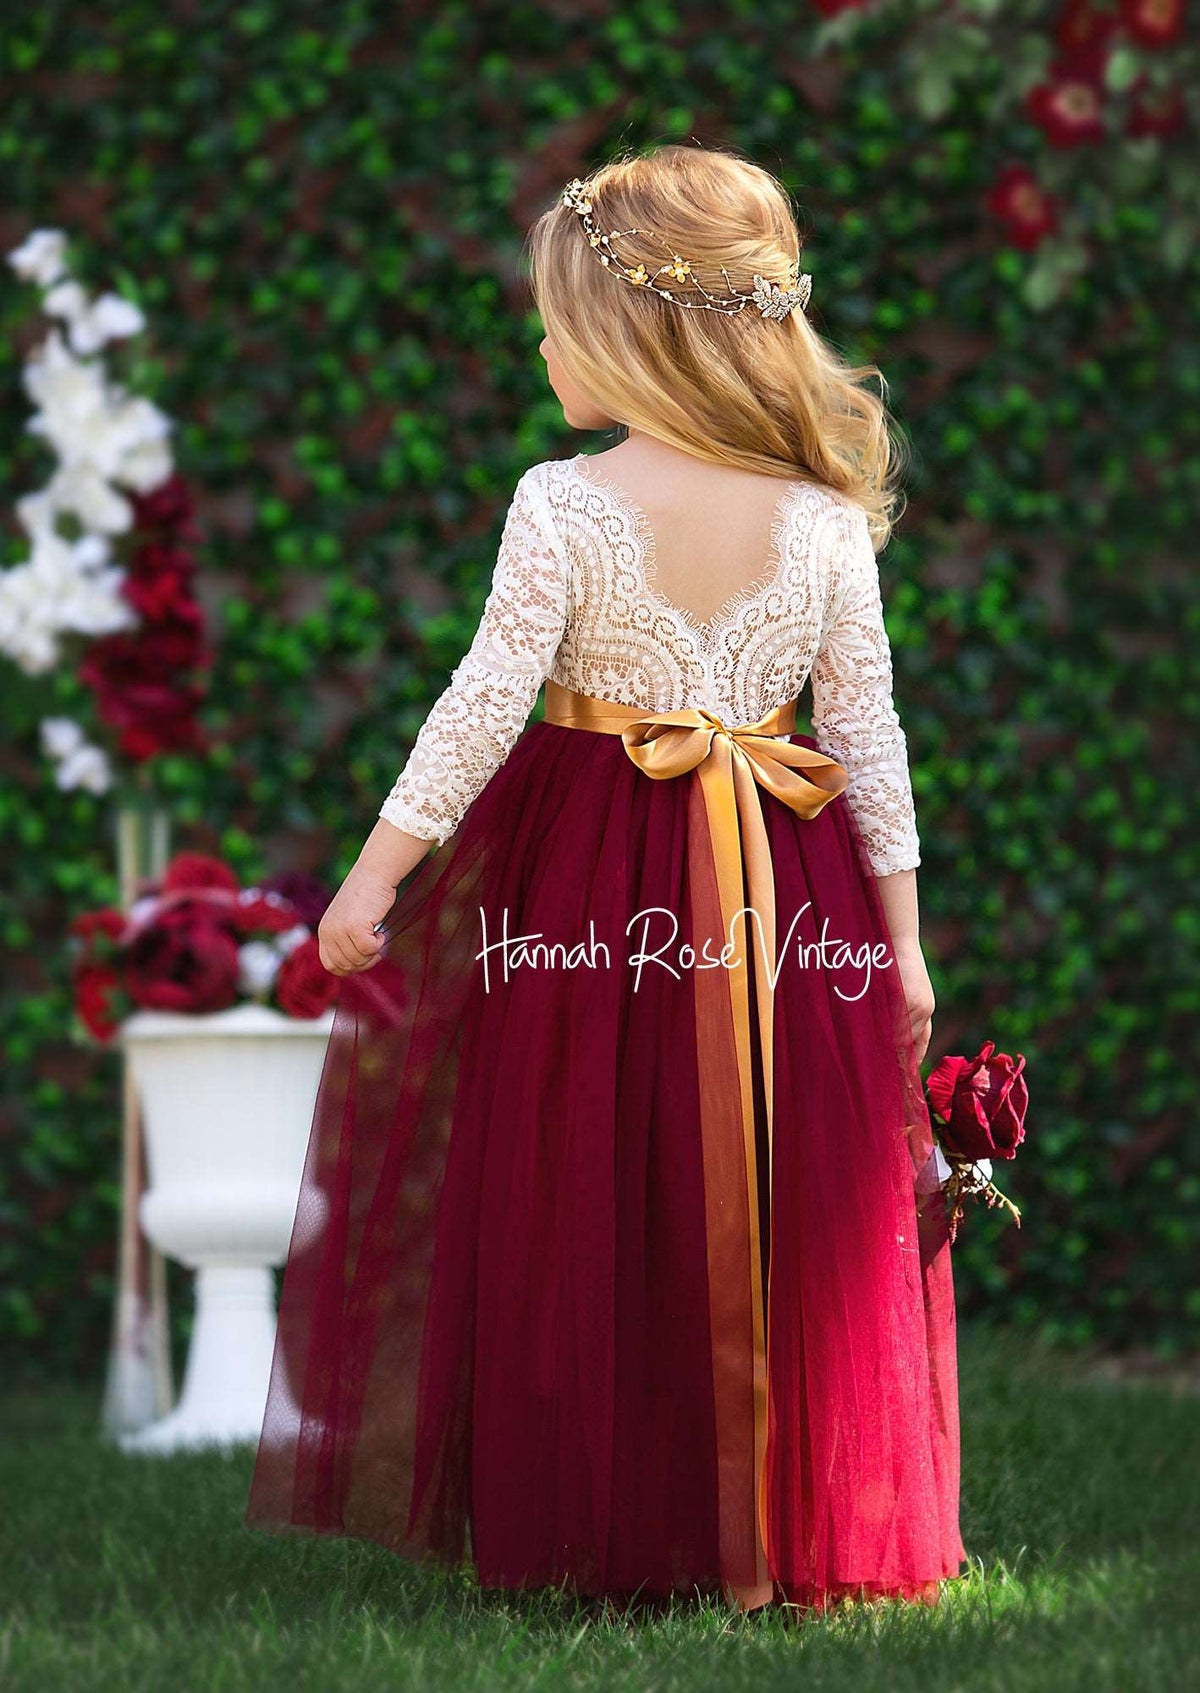 Burgundy Lace and Tulle Flower Girl Dress - Hannahrosevintageboutique.com